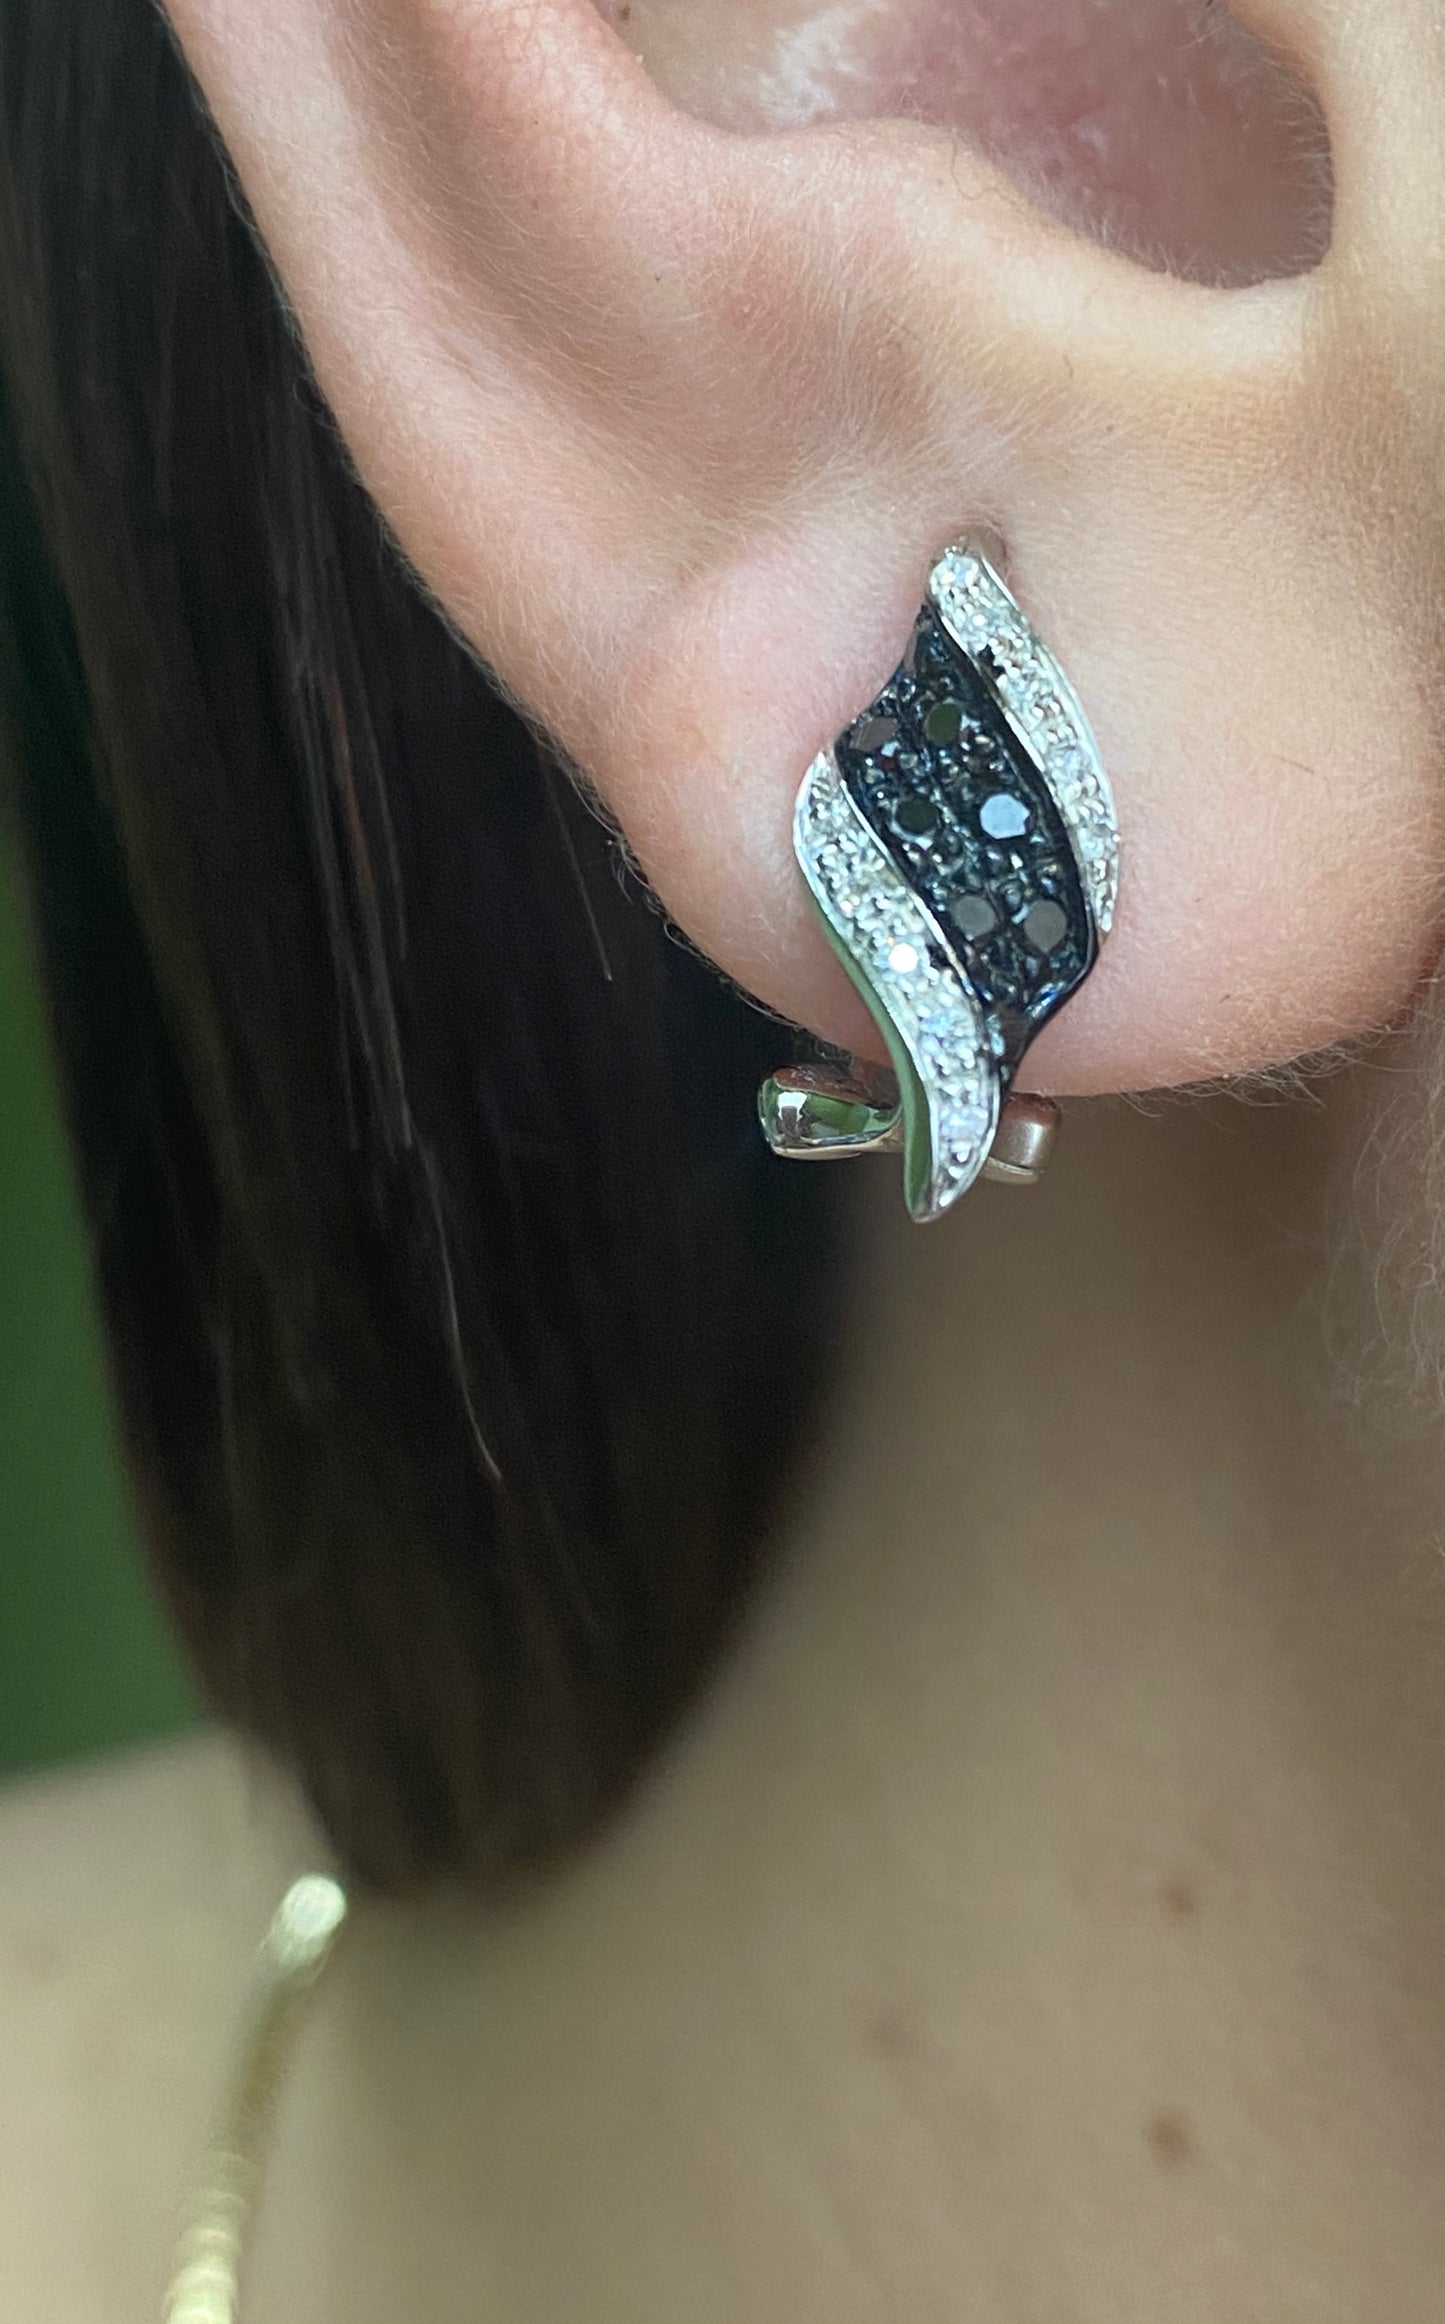 Black Diamond Earring E11998